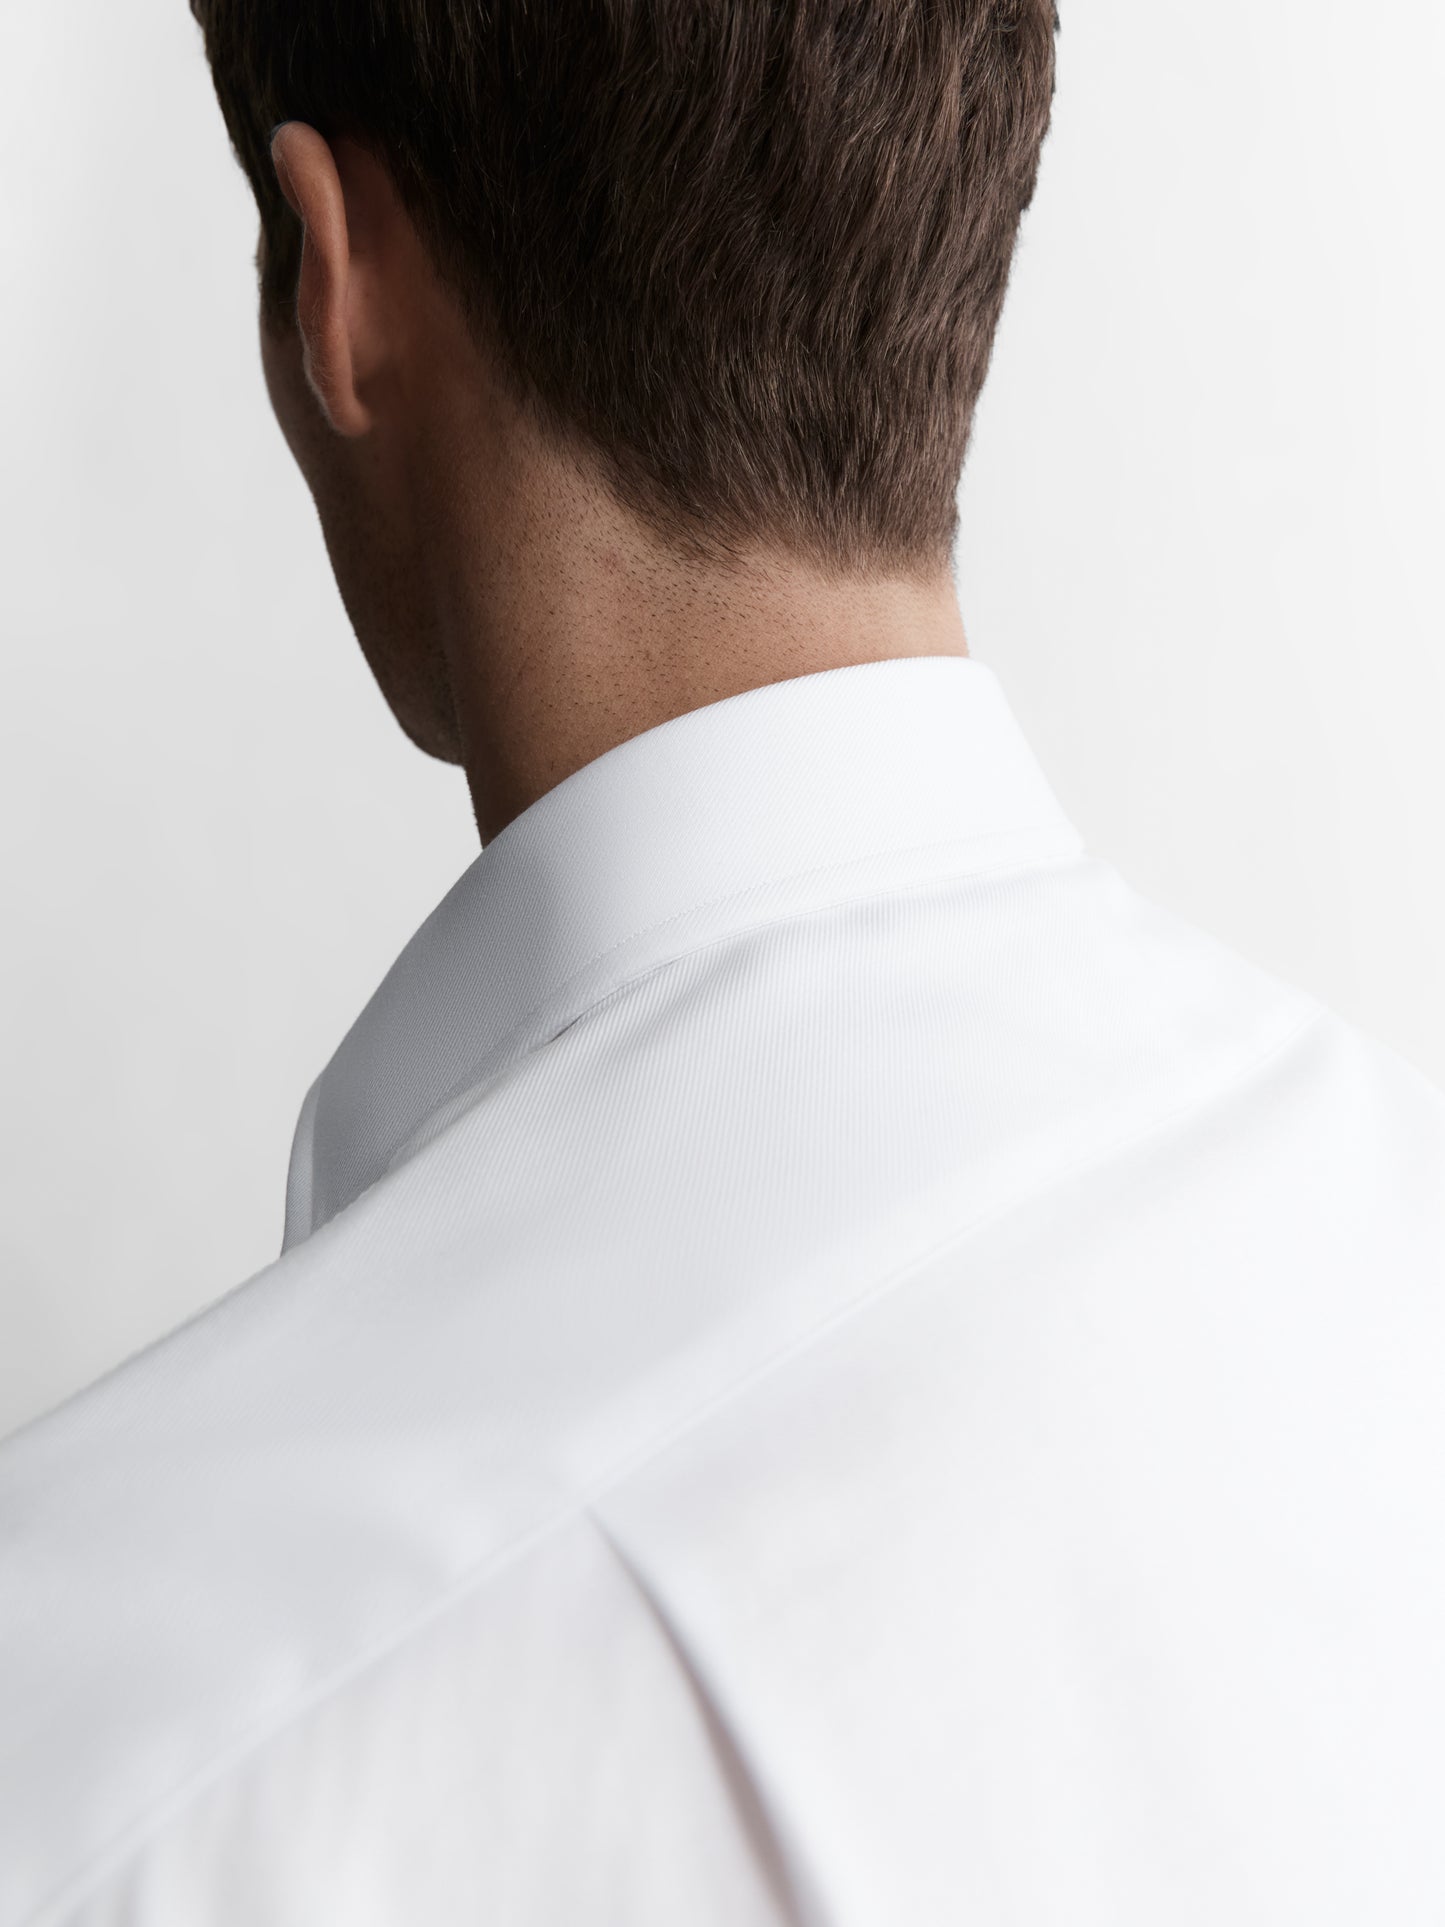 Non-Iron White Twill Regular Fit Single Cuff Classic Collar Shirt